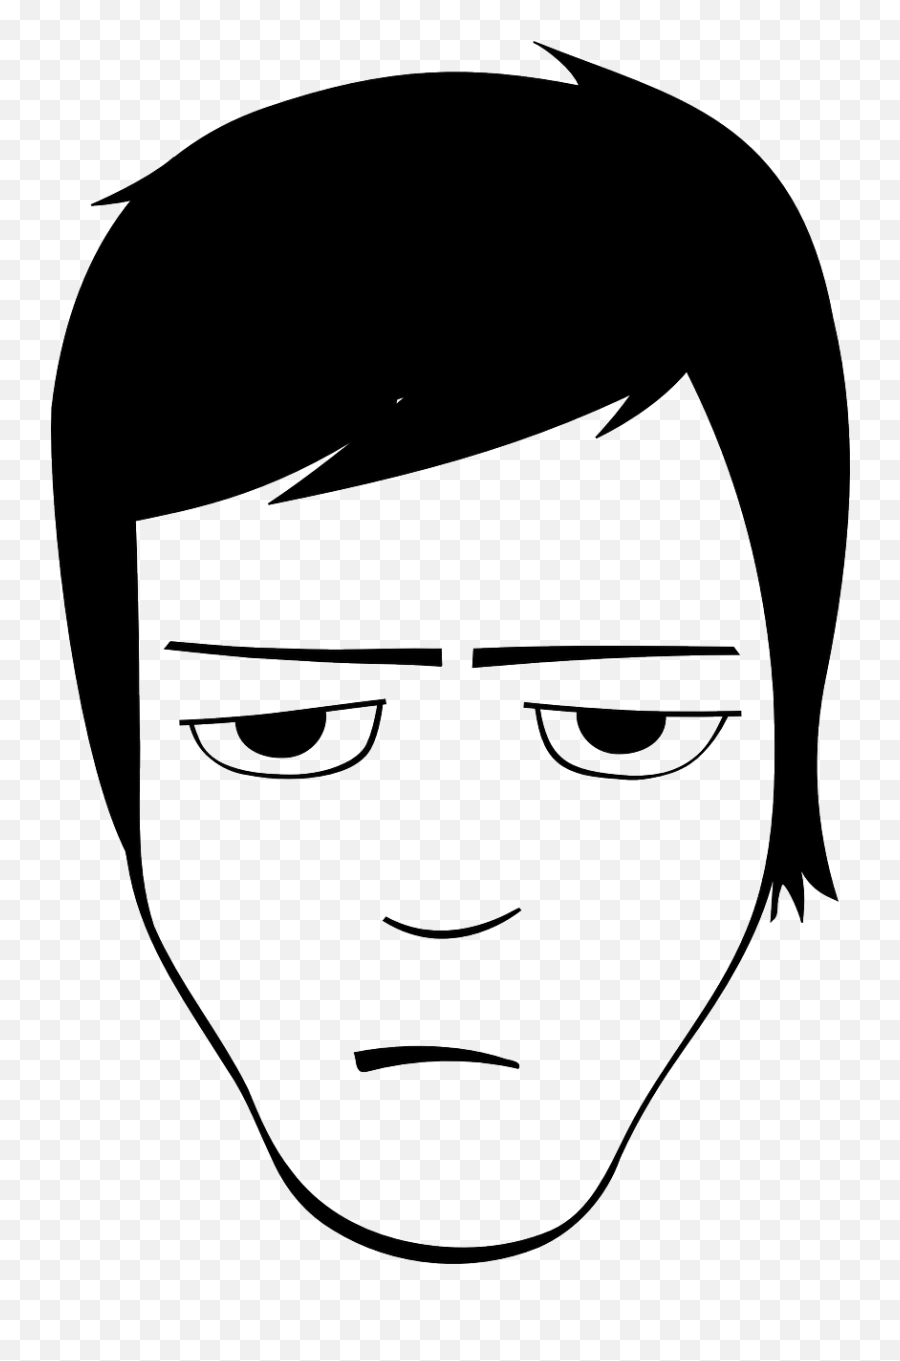 Bored Man Human Face Avatar - Bored Face Cartoon Emoji,Bored Emoticon